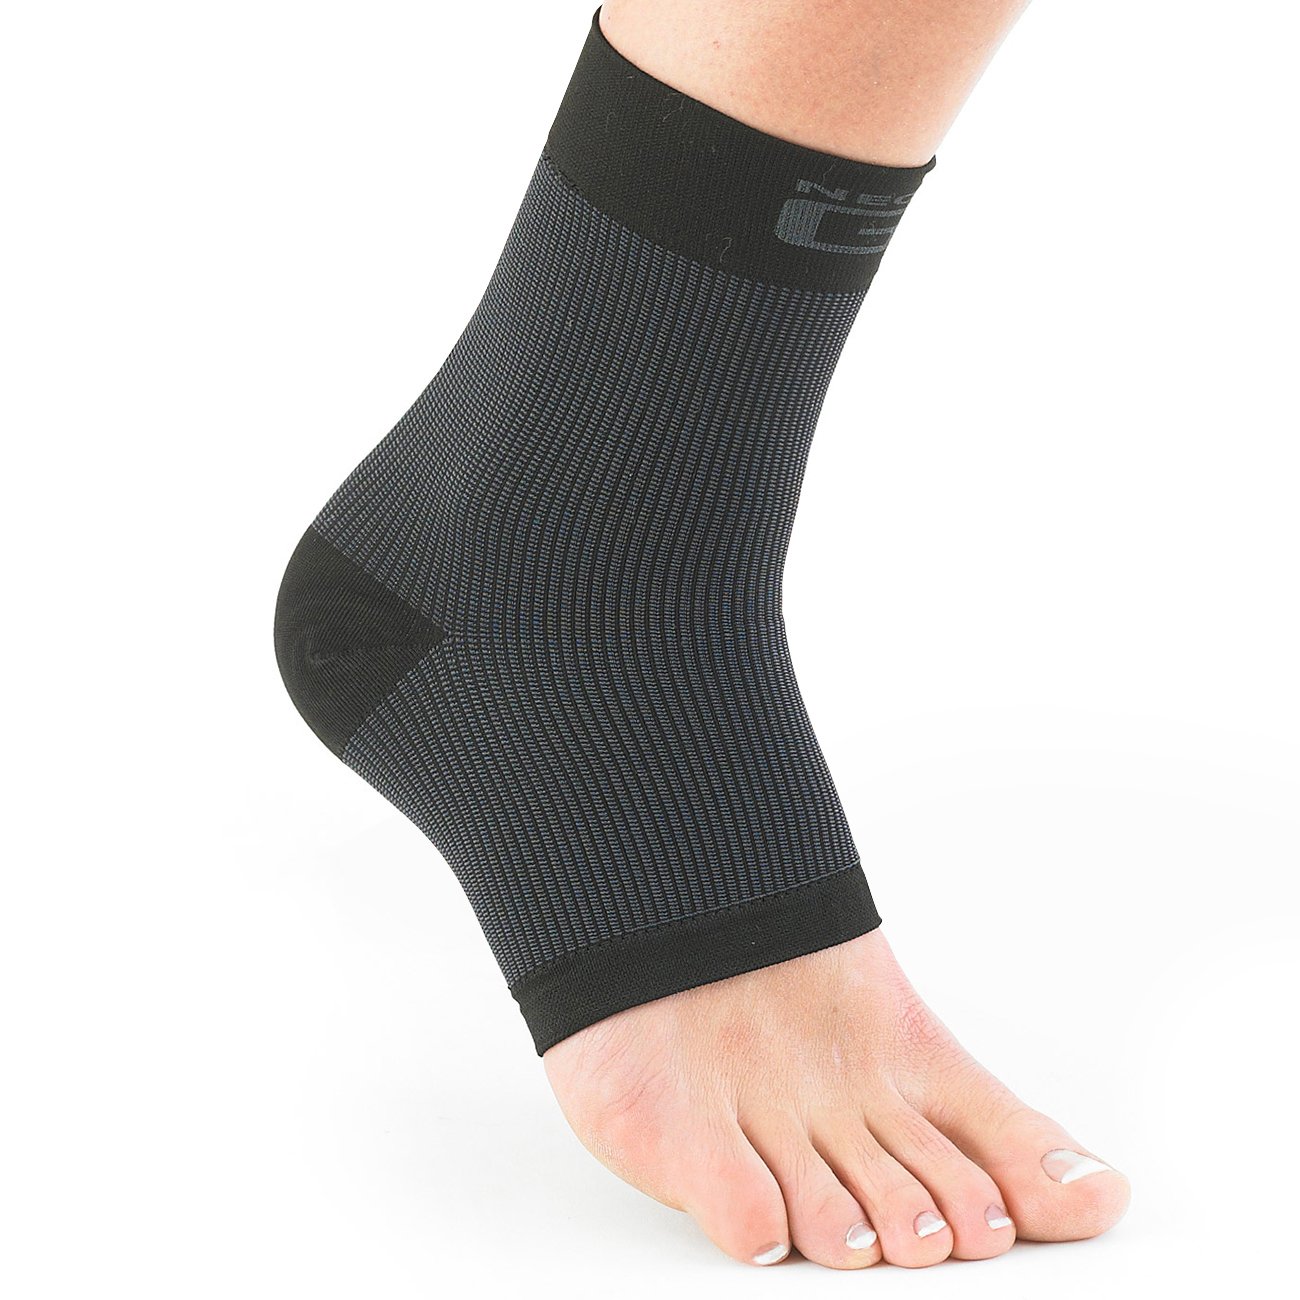 Neo G Airflow Ankle Support - Medium